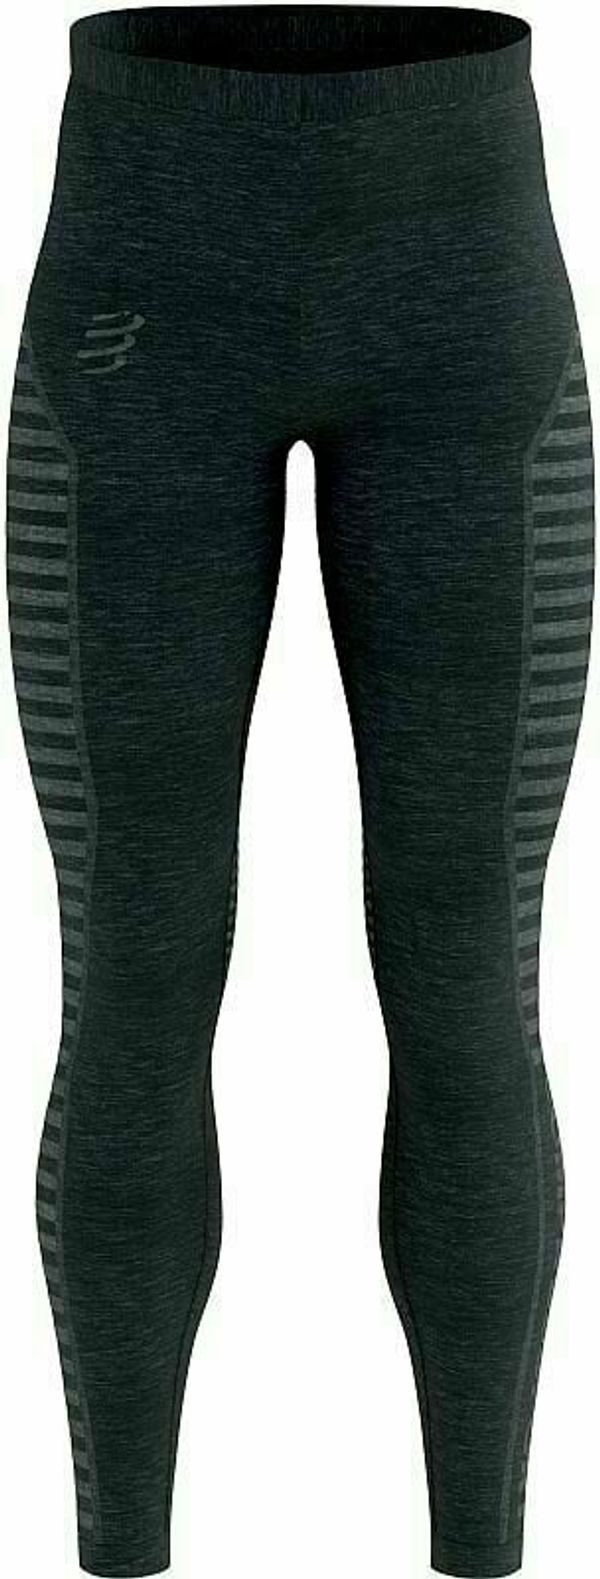 Compressport Compressport Winter Run Legging Black L Tekaške hlače/pajkice